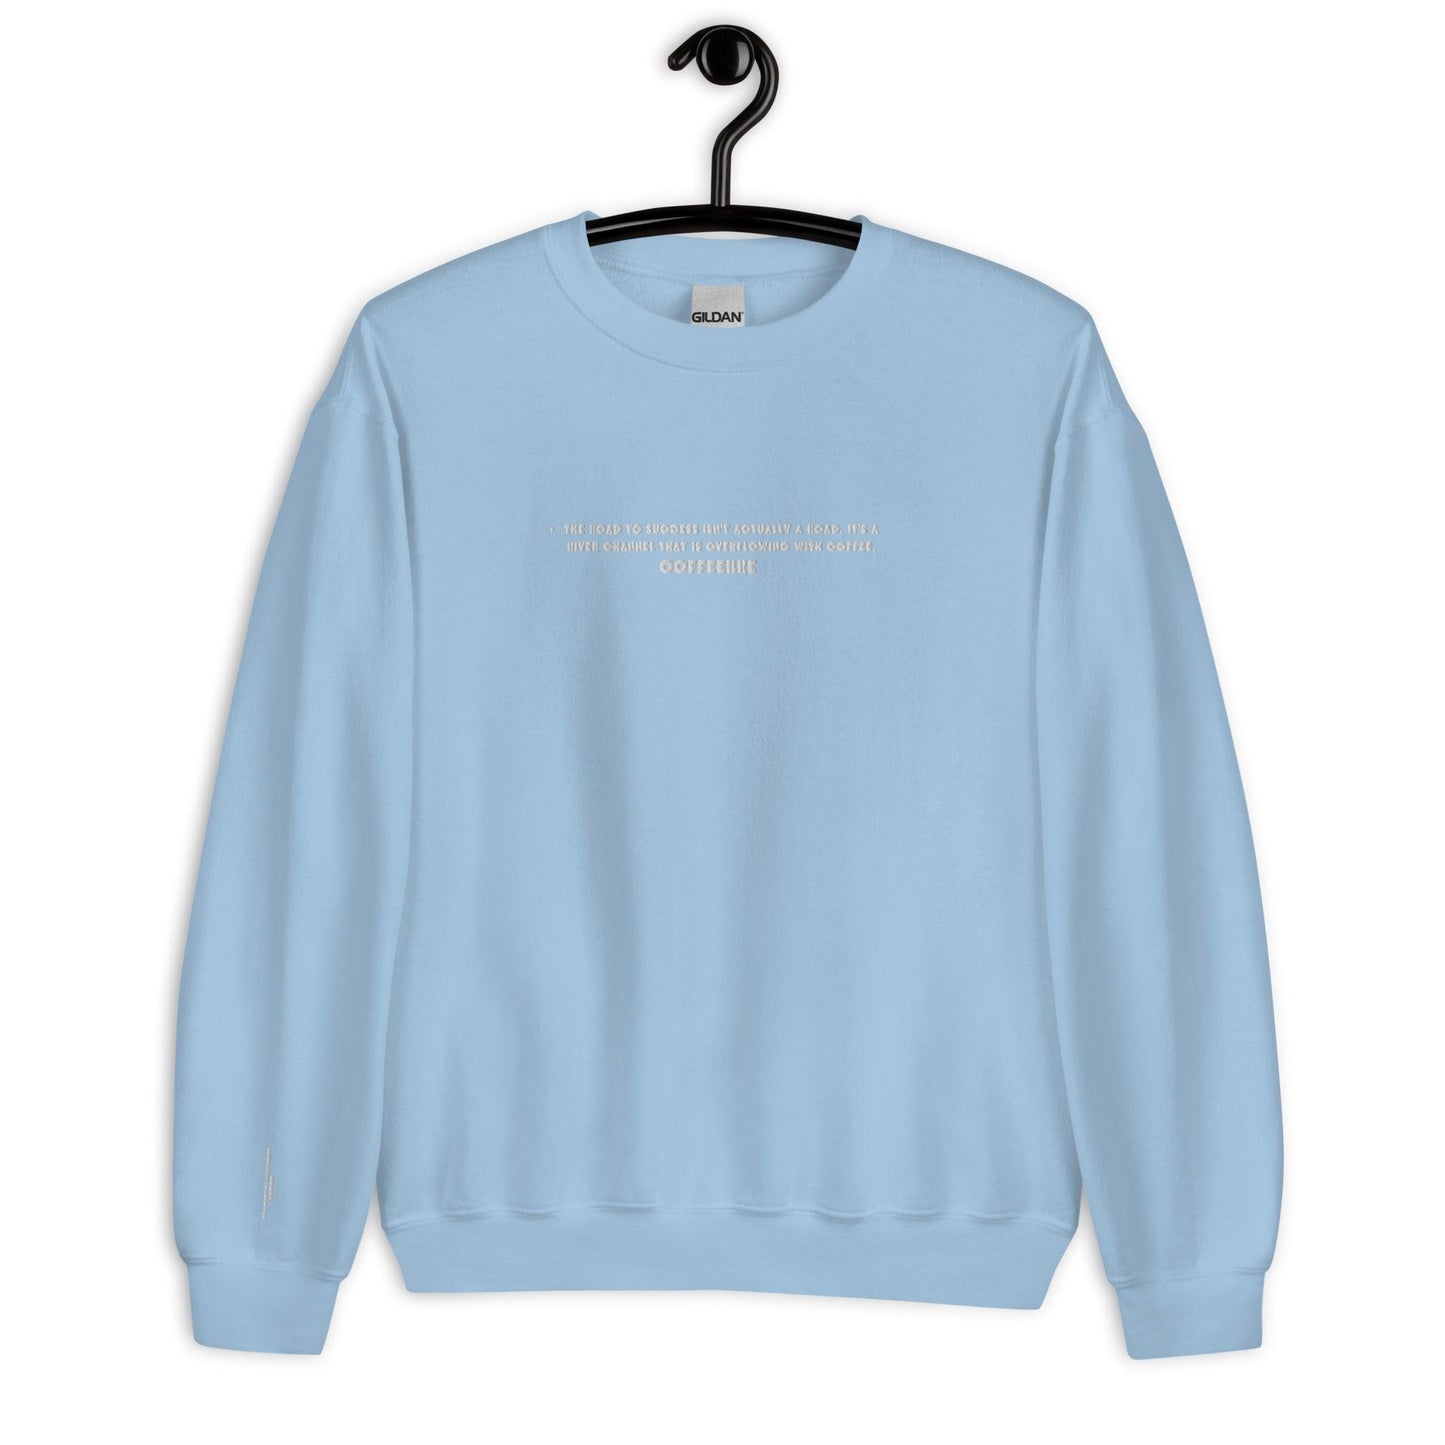 Embroidered Coffee Lifestyle Unisex Sweatshirts - COFFEEBRE